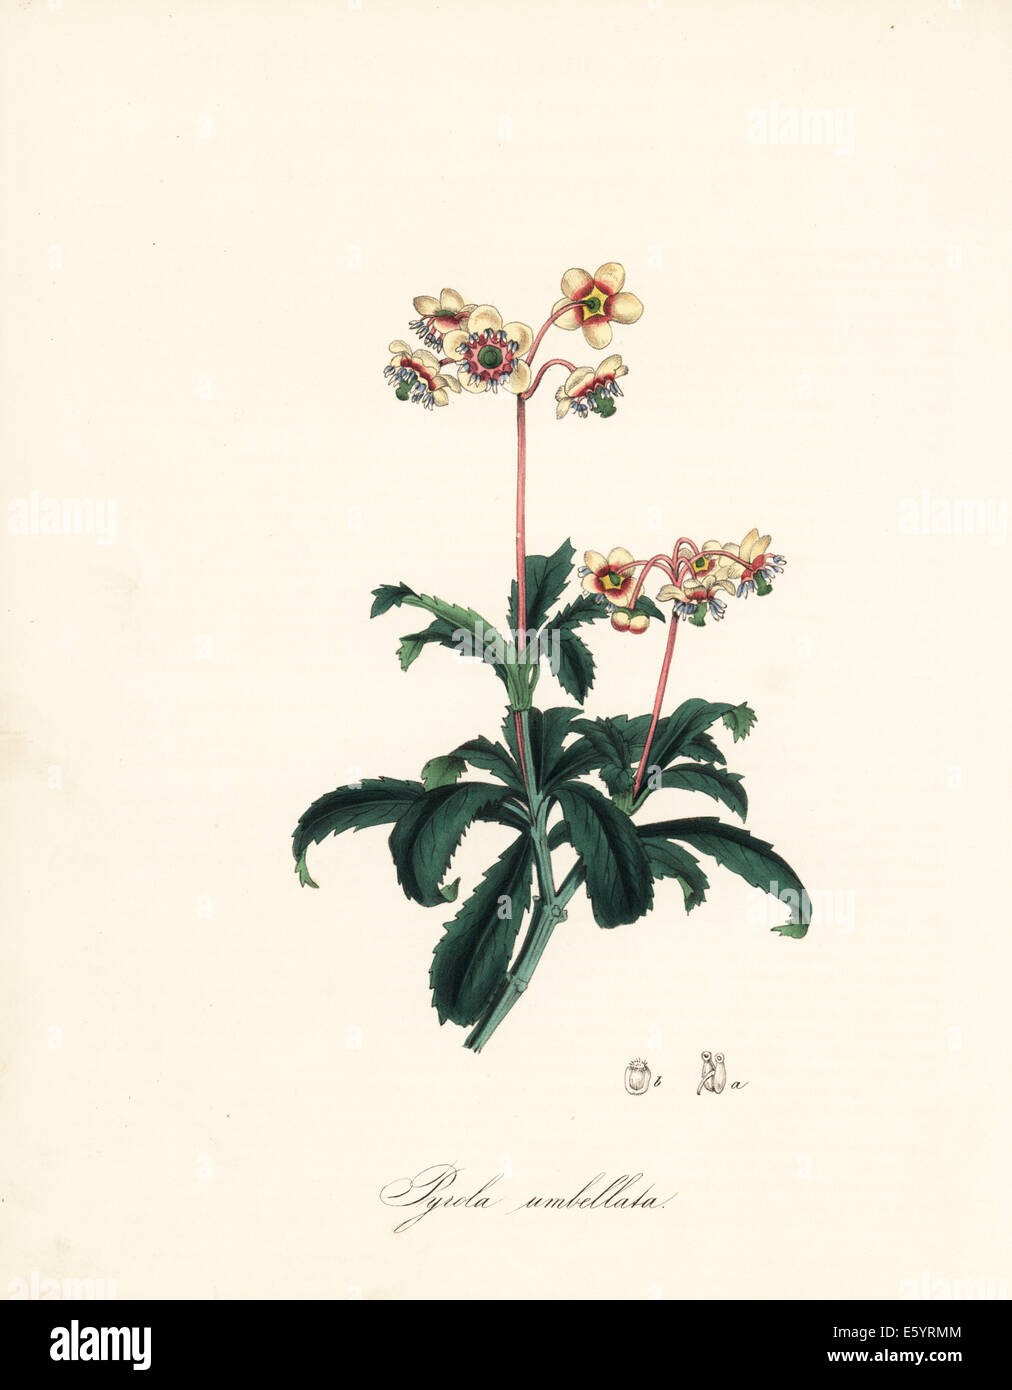 Umbellate wintergreen, Chimaphila umbellata. Stock Photo